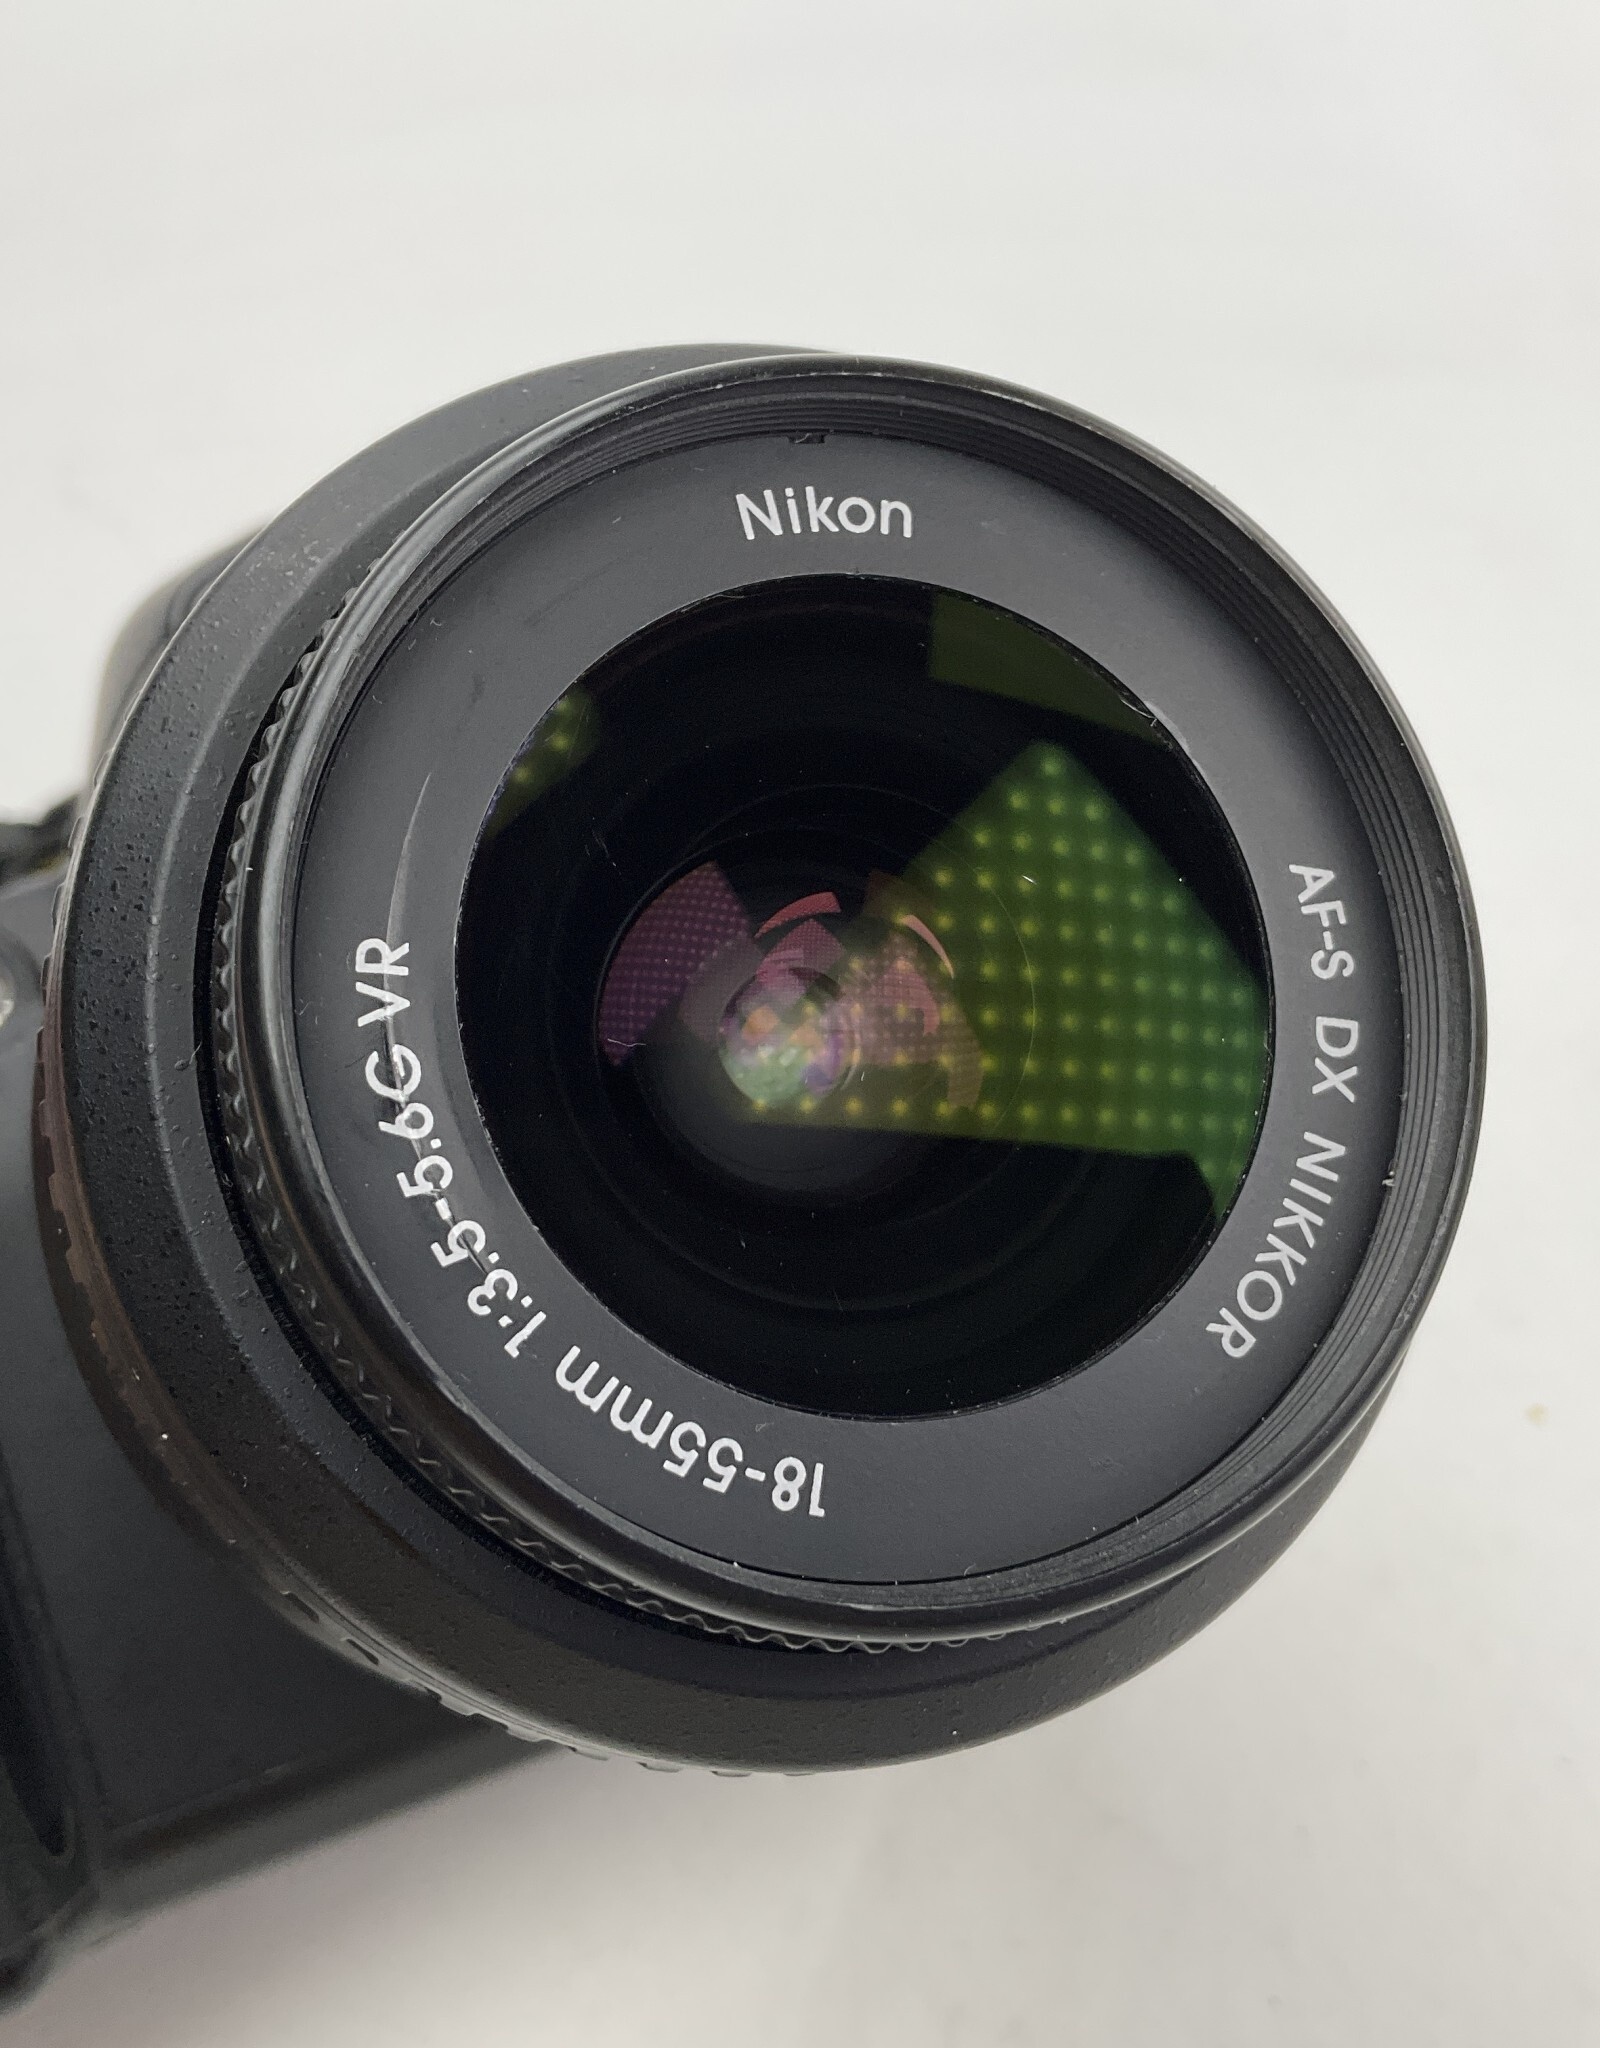 NIKON Nikon D5000 Camera Body w/ 18-55mm VR Used Good